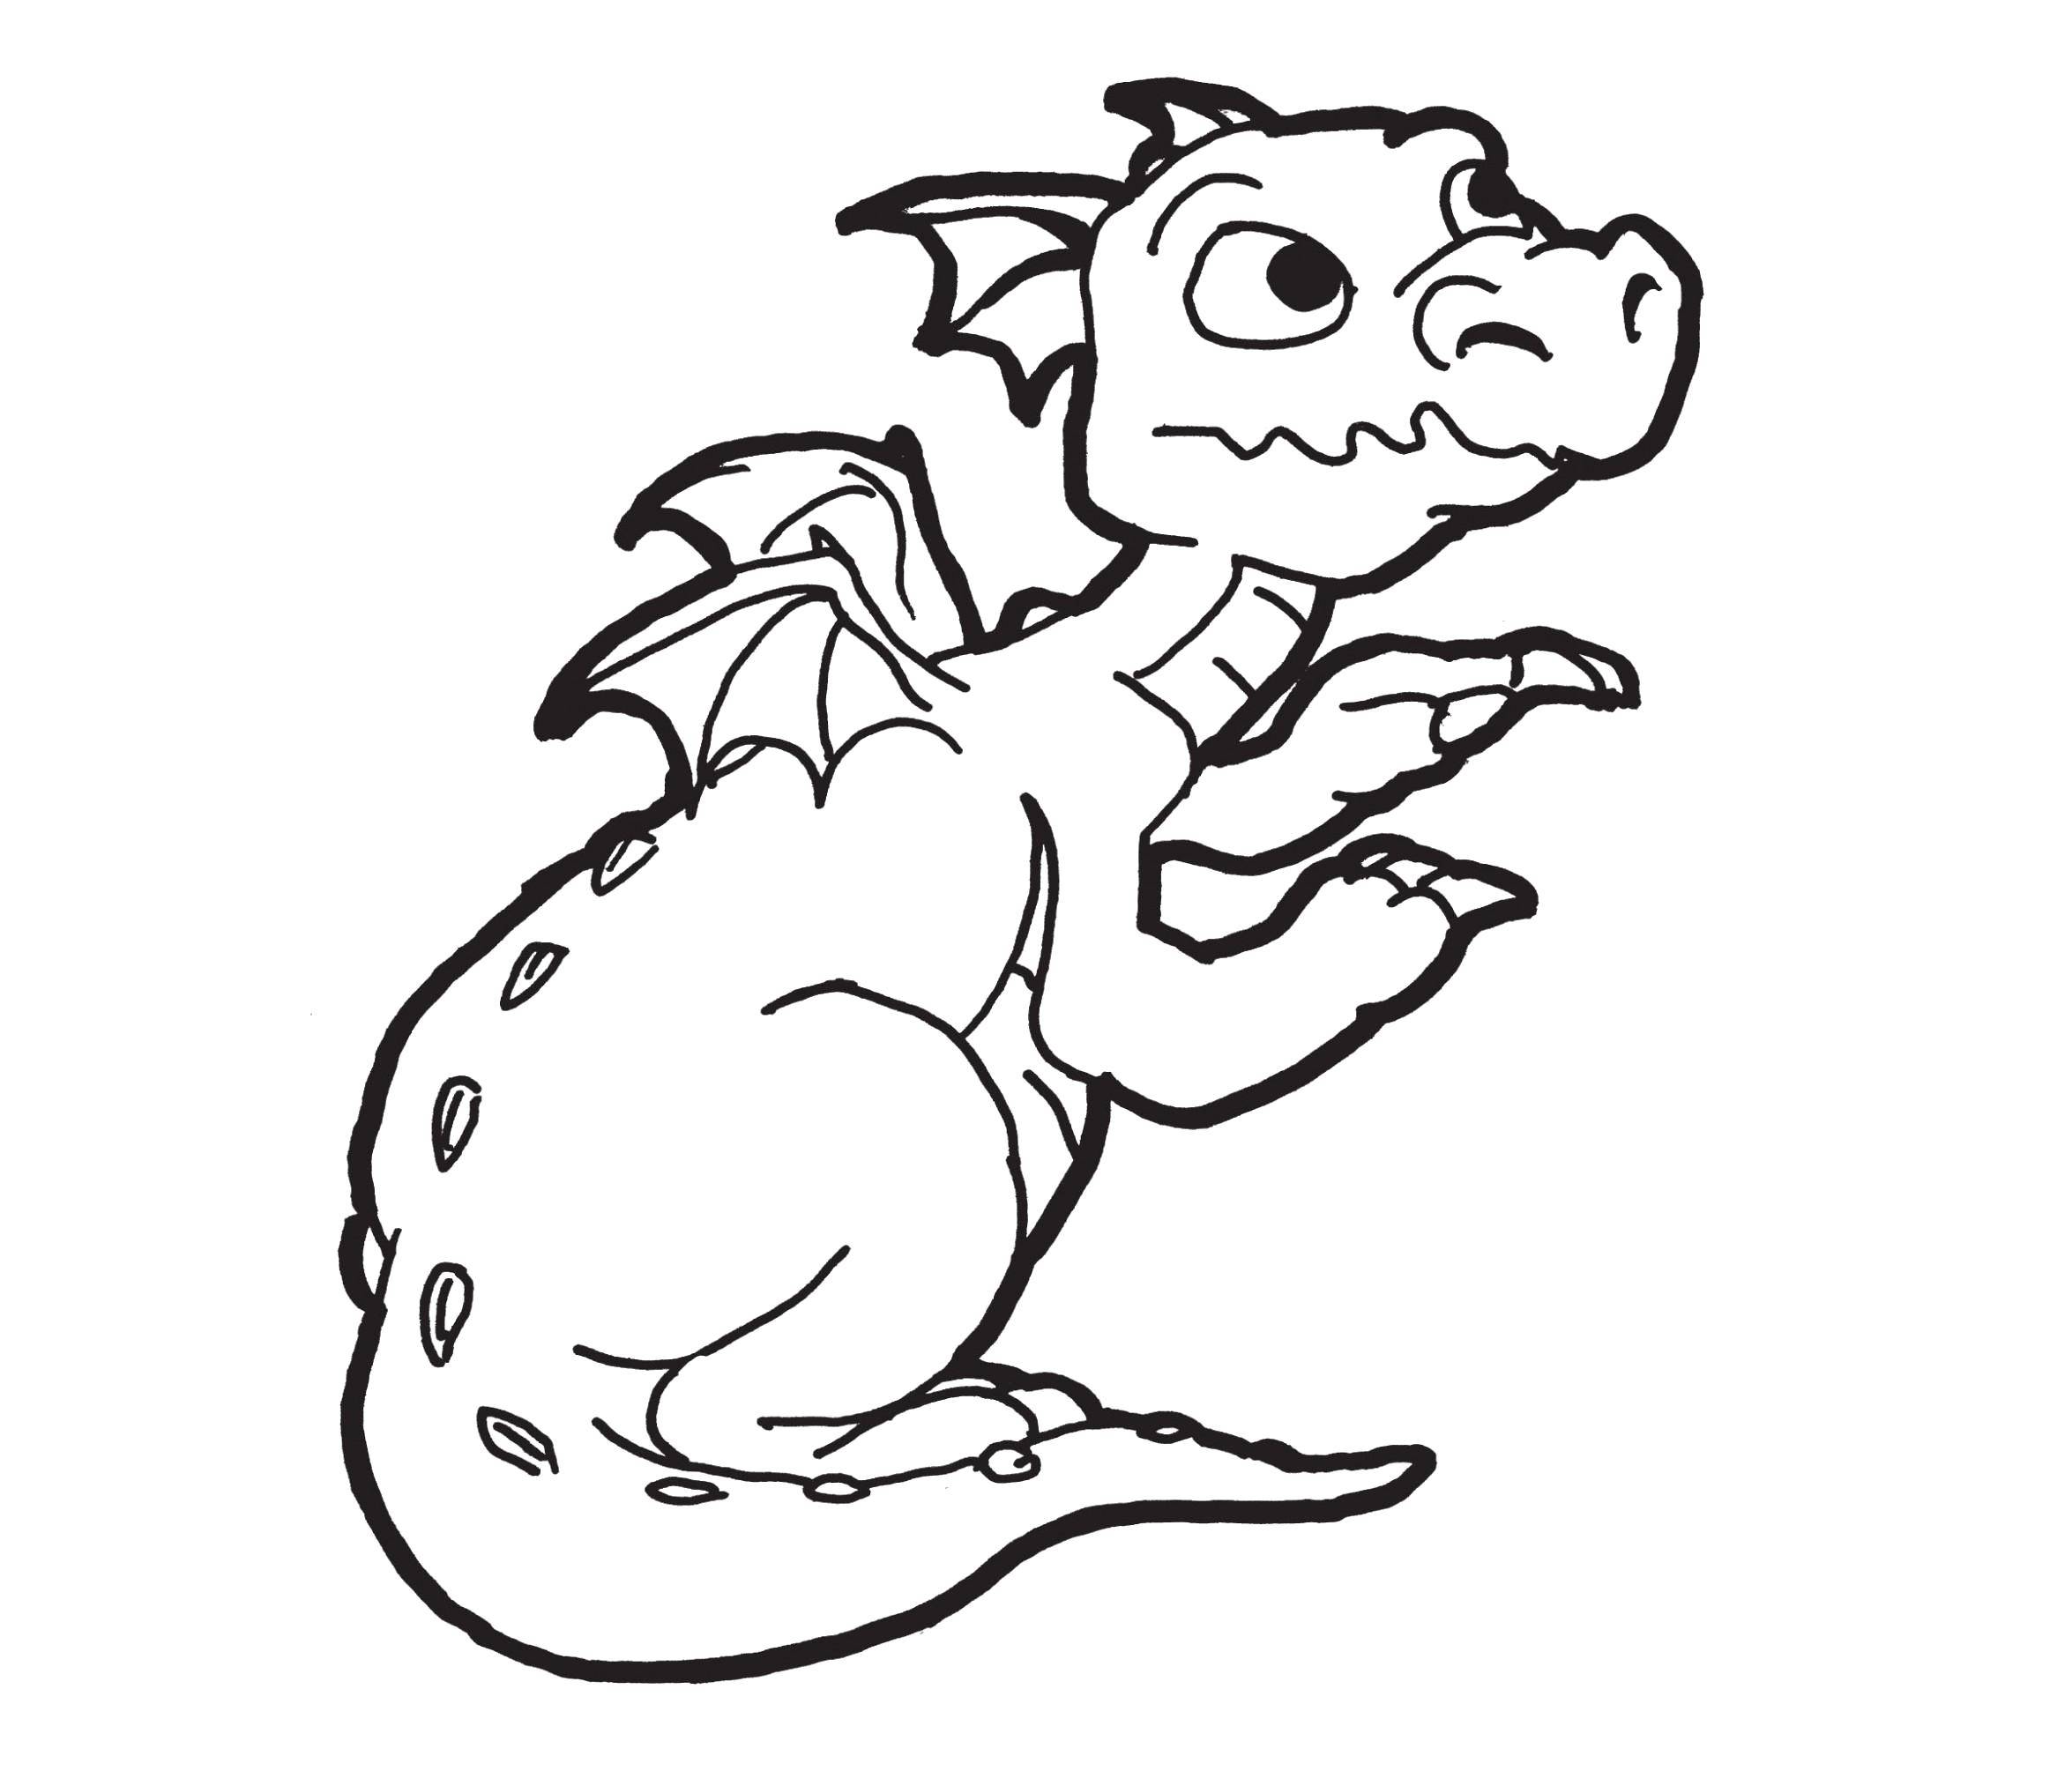 Coloring Dragon. Category coloring. Tags:  Dragons.